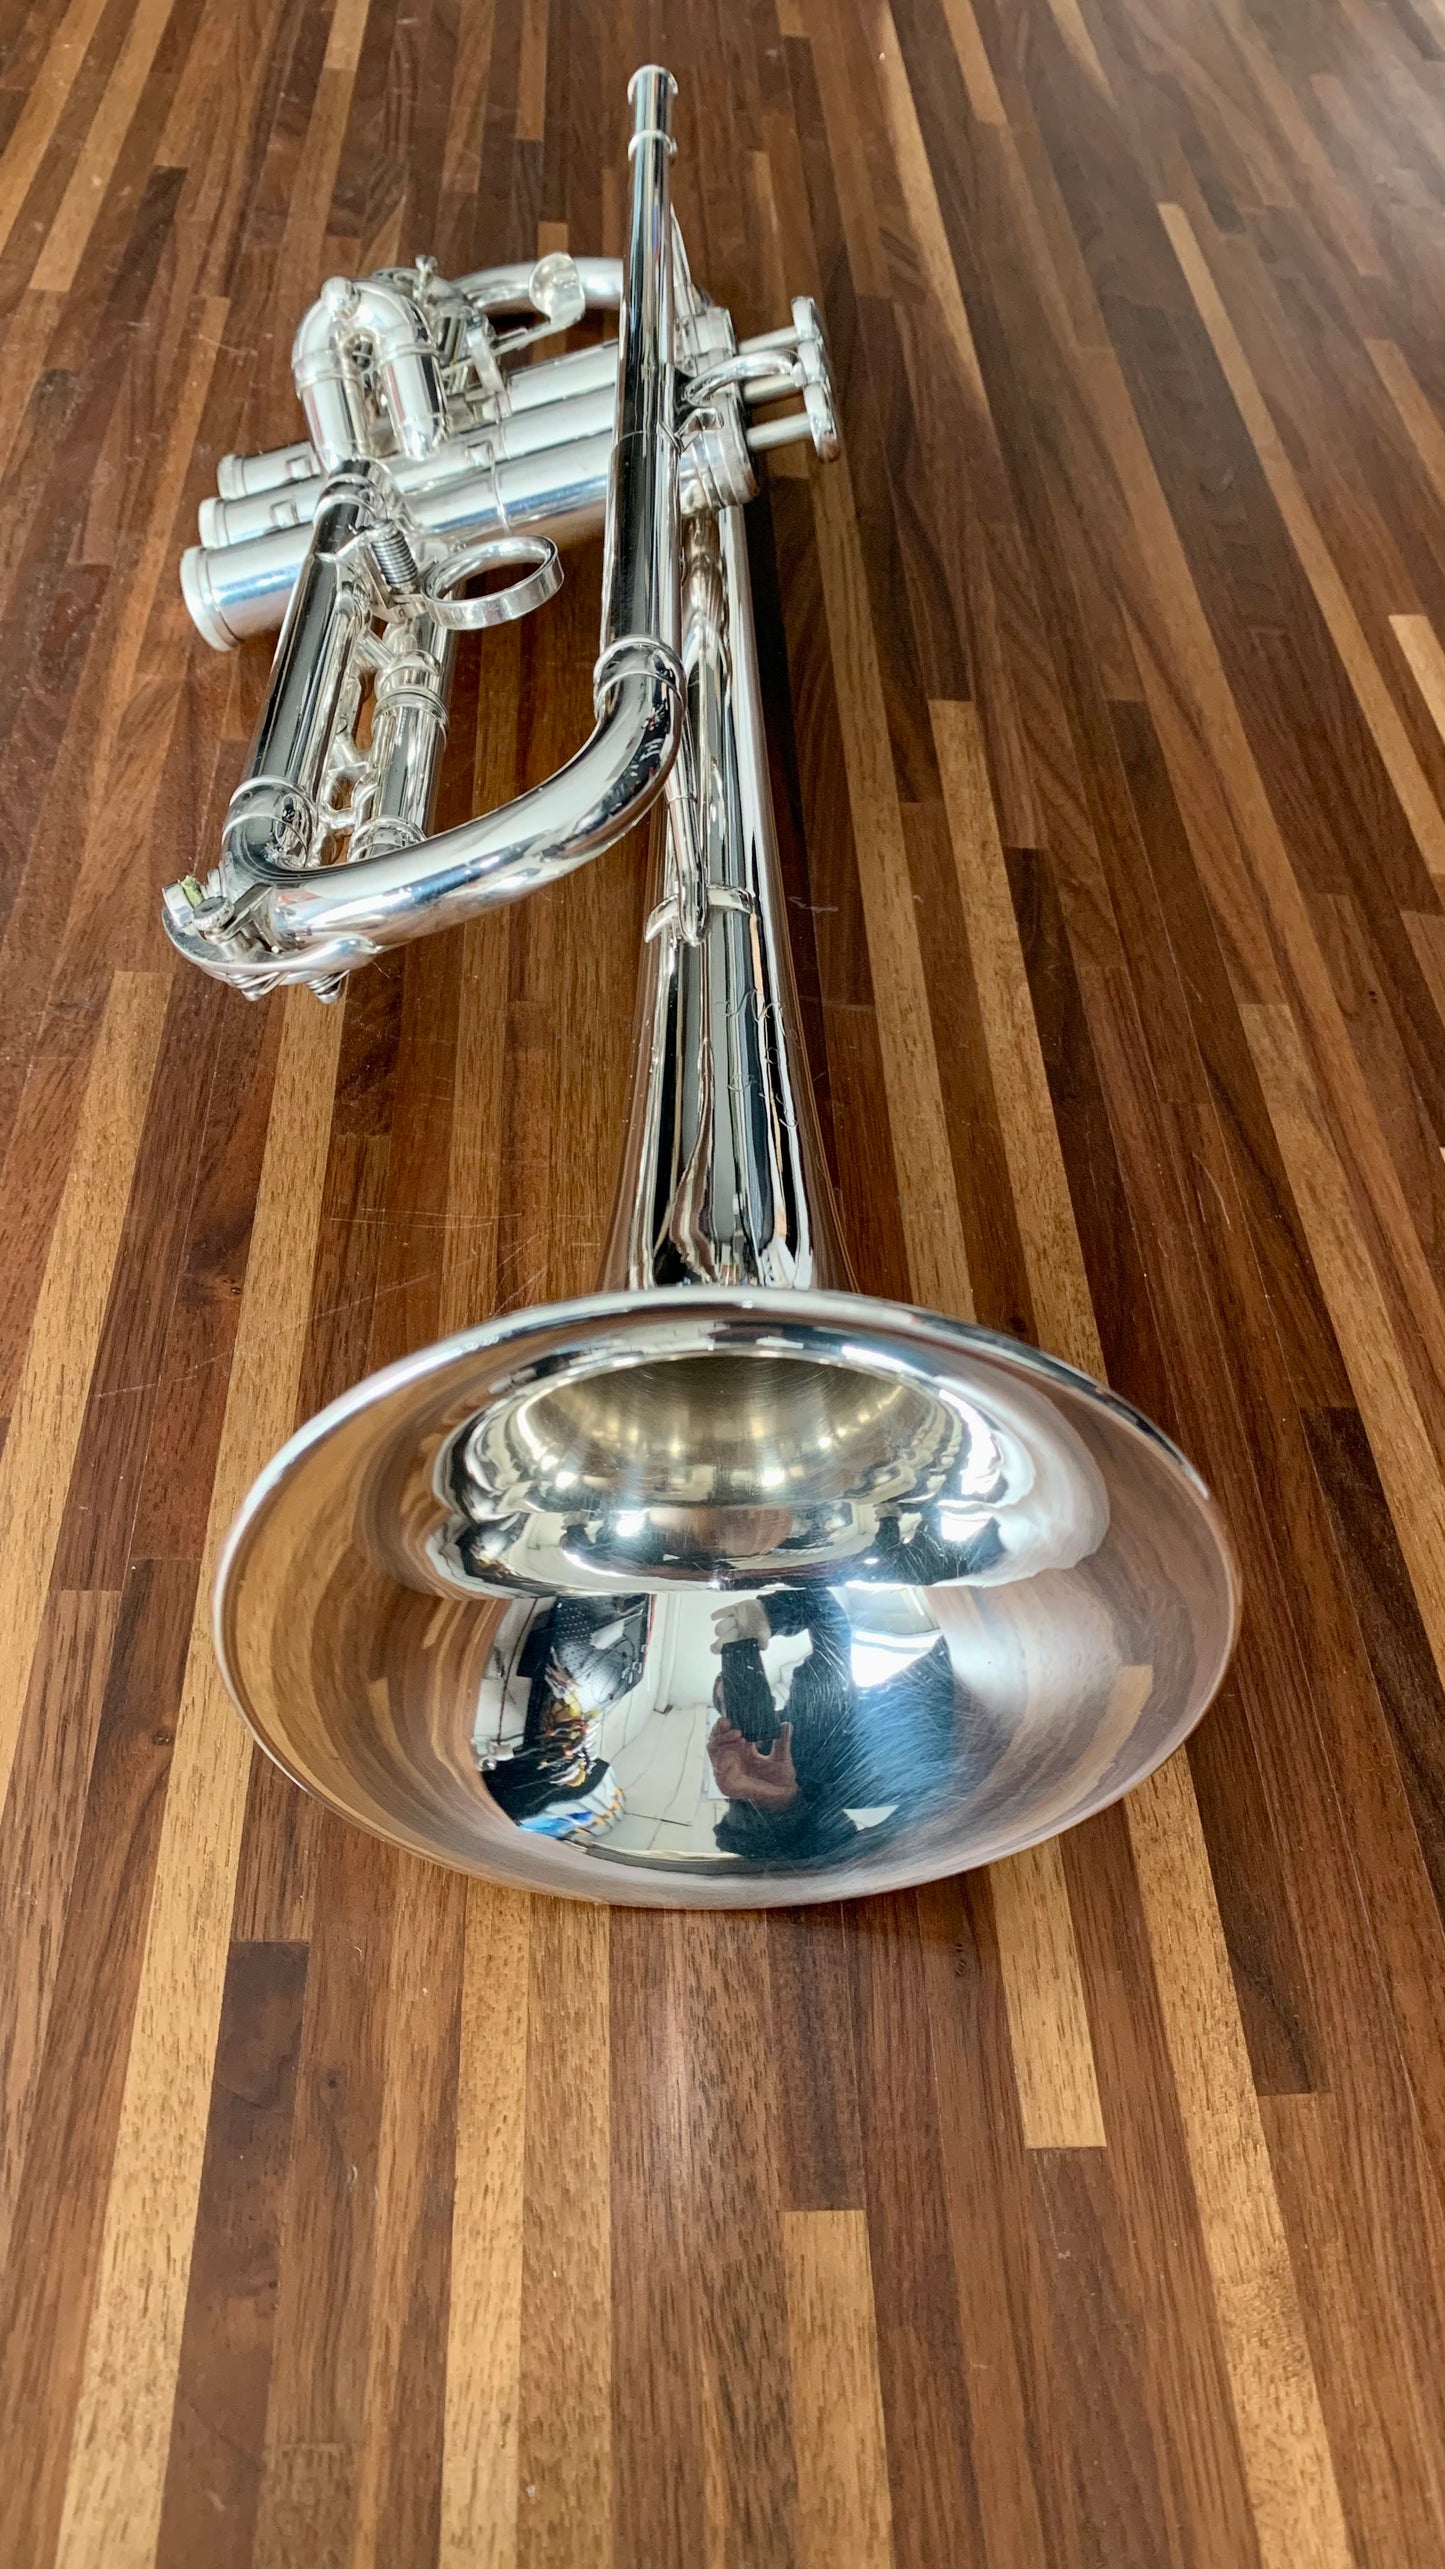 Trumpet Olds Mendez Bb